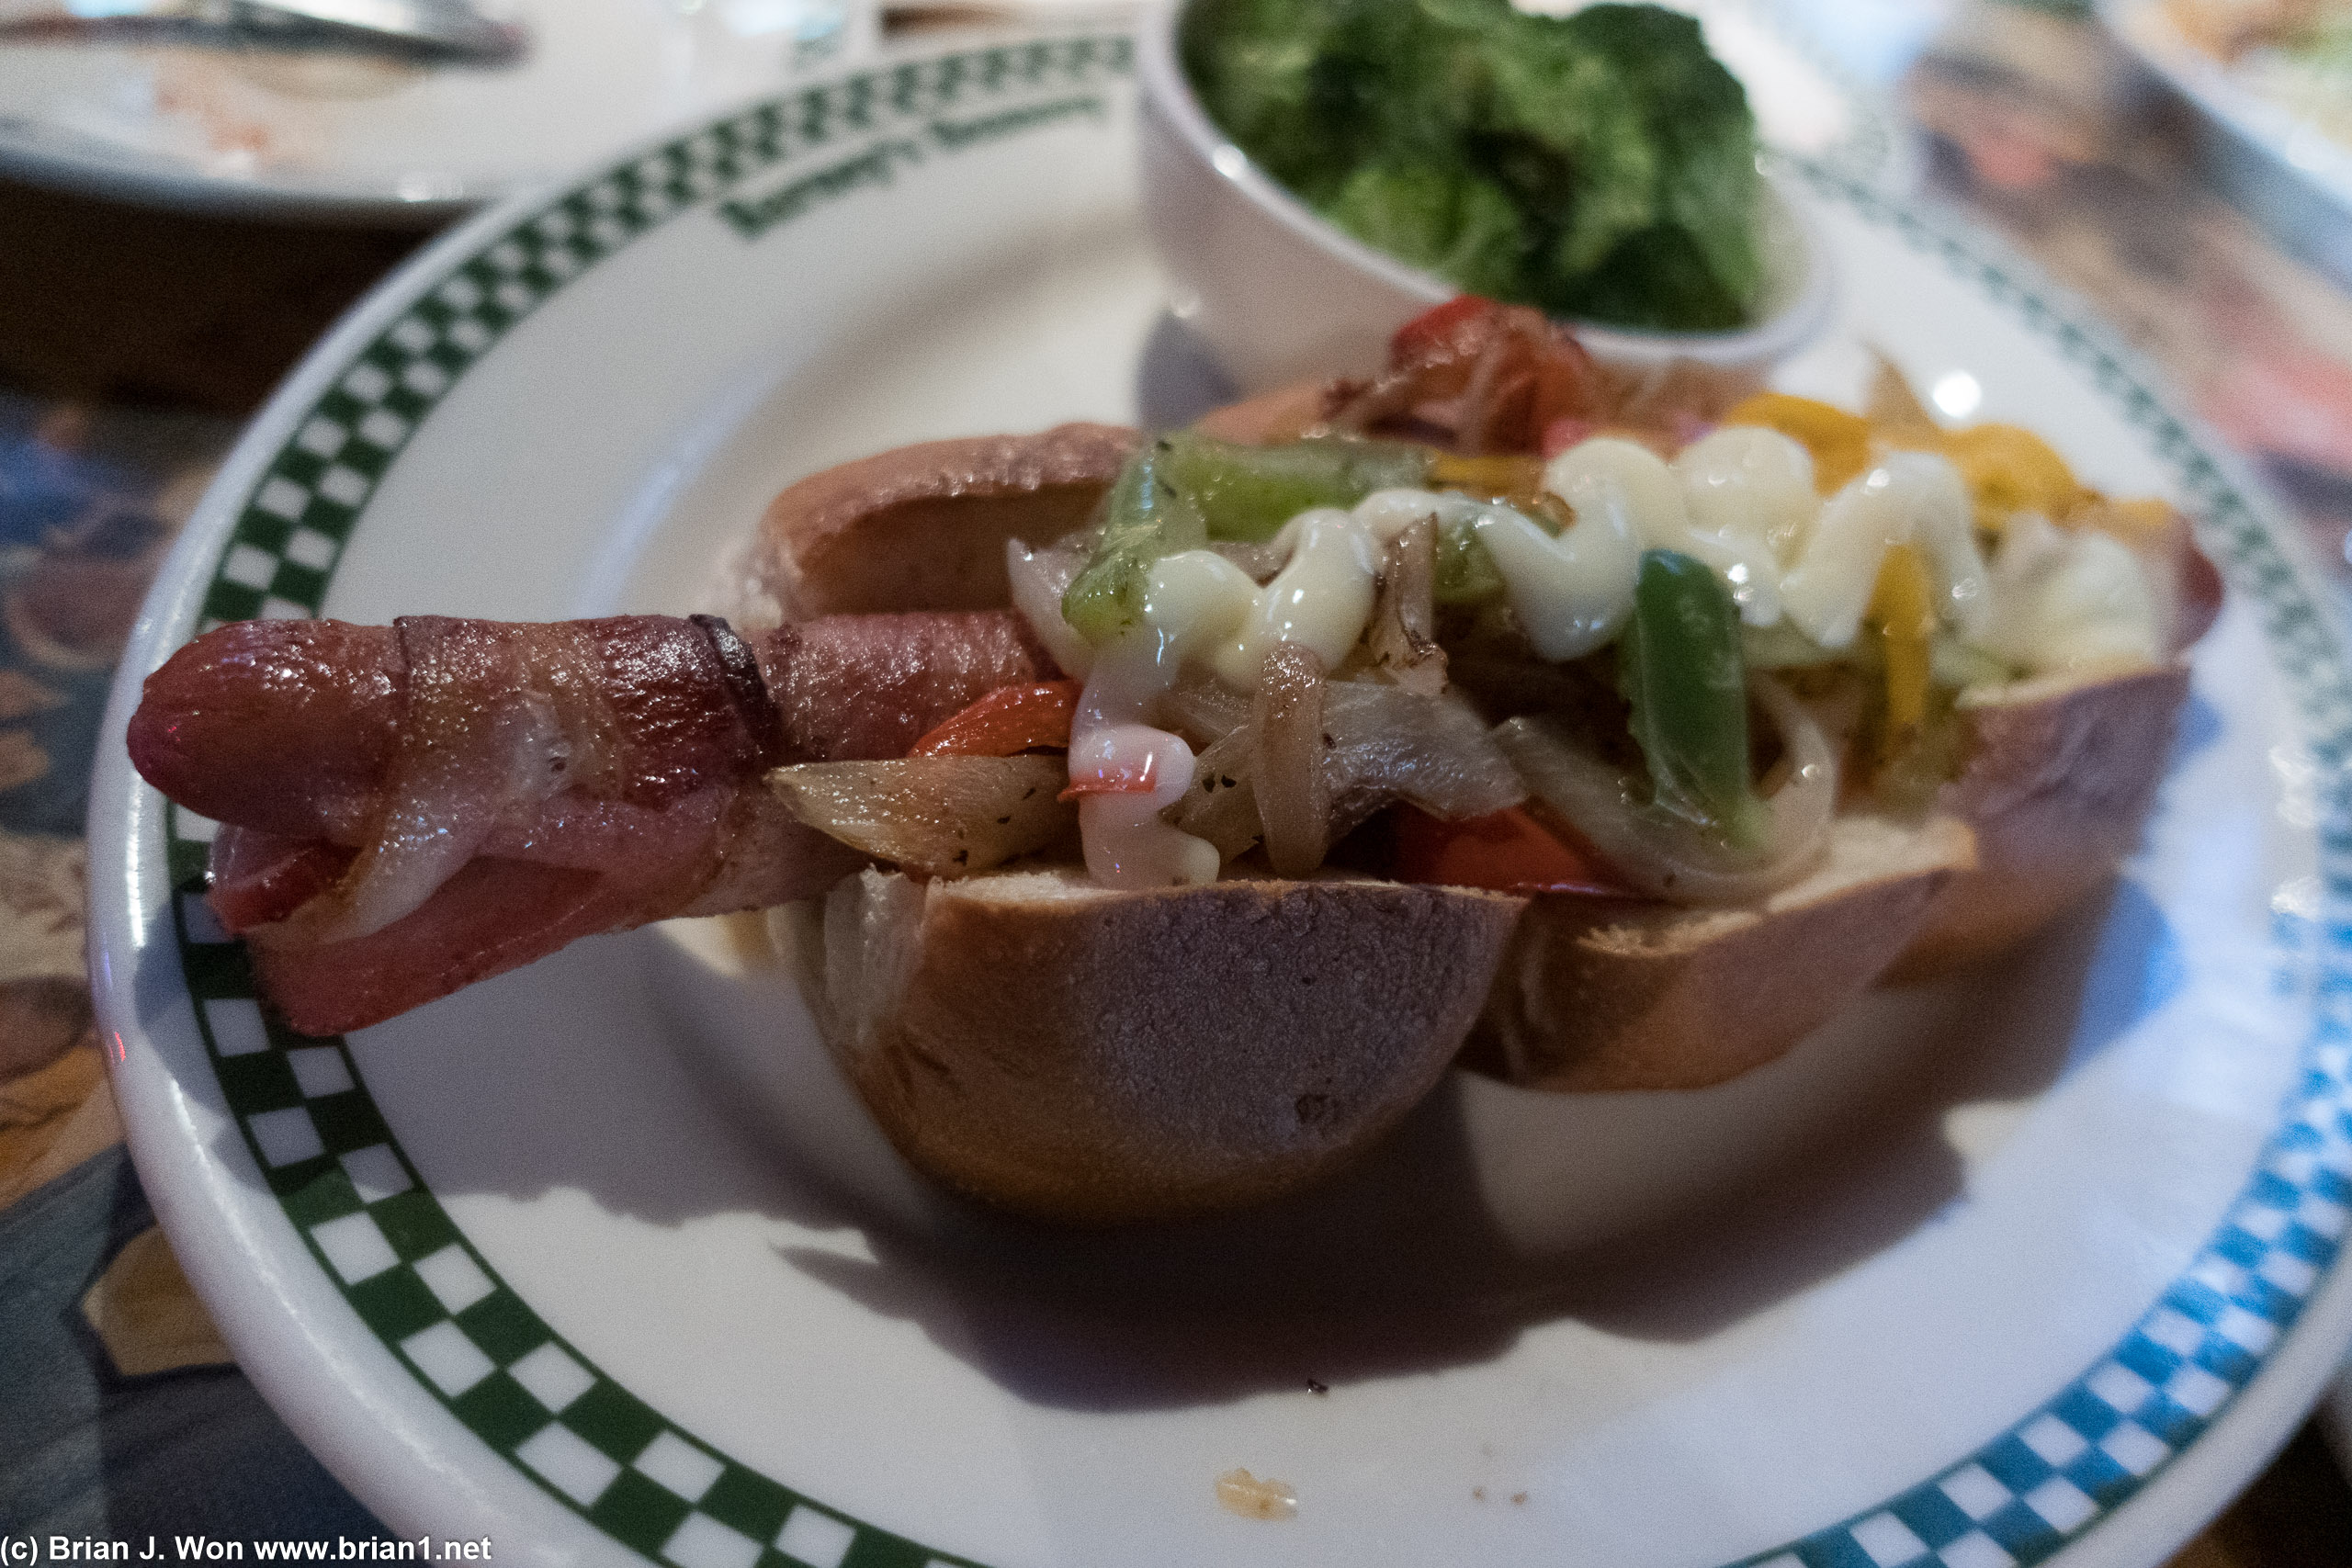 Hot dog at Barney's Beanery.